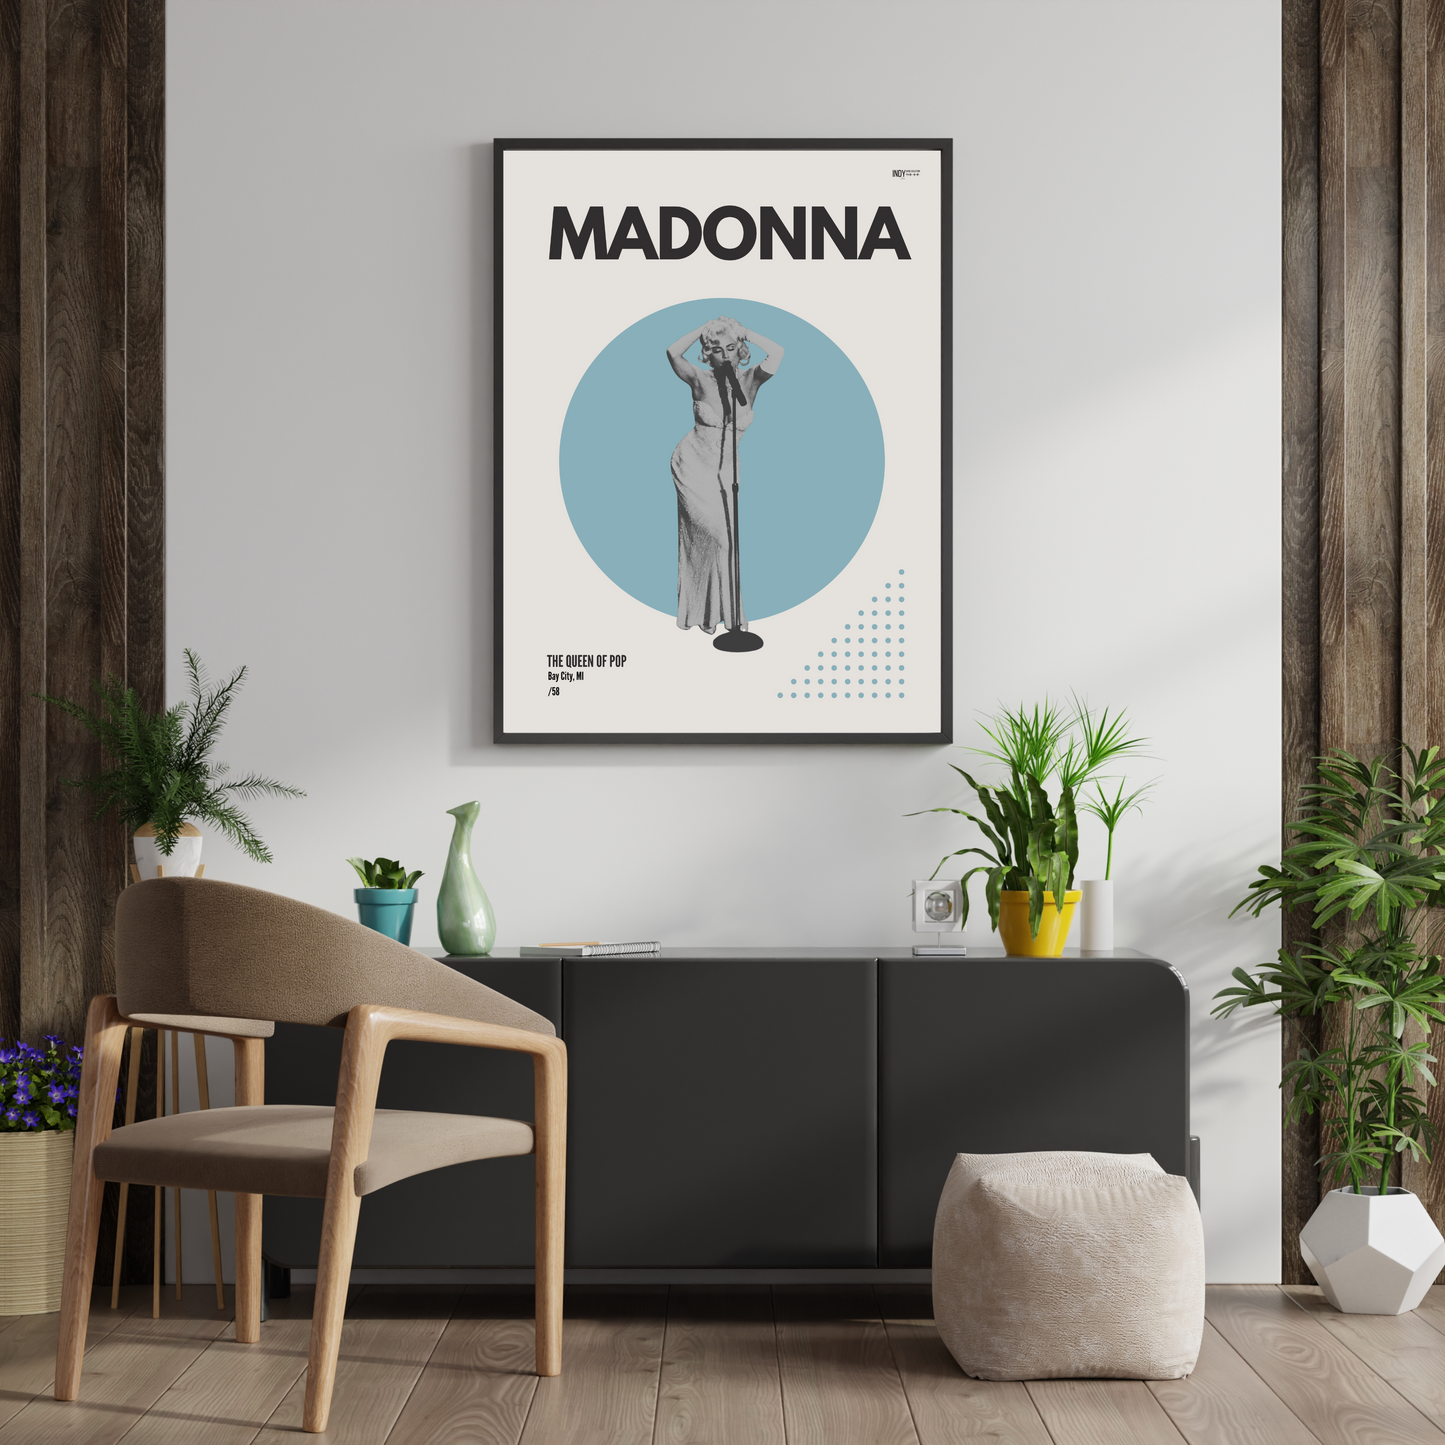 Madonna - The Queen of Pop Mid-Century Modern Artist Poster